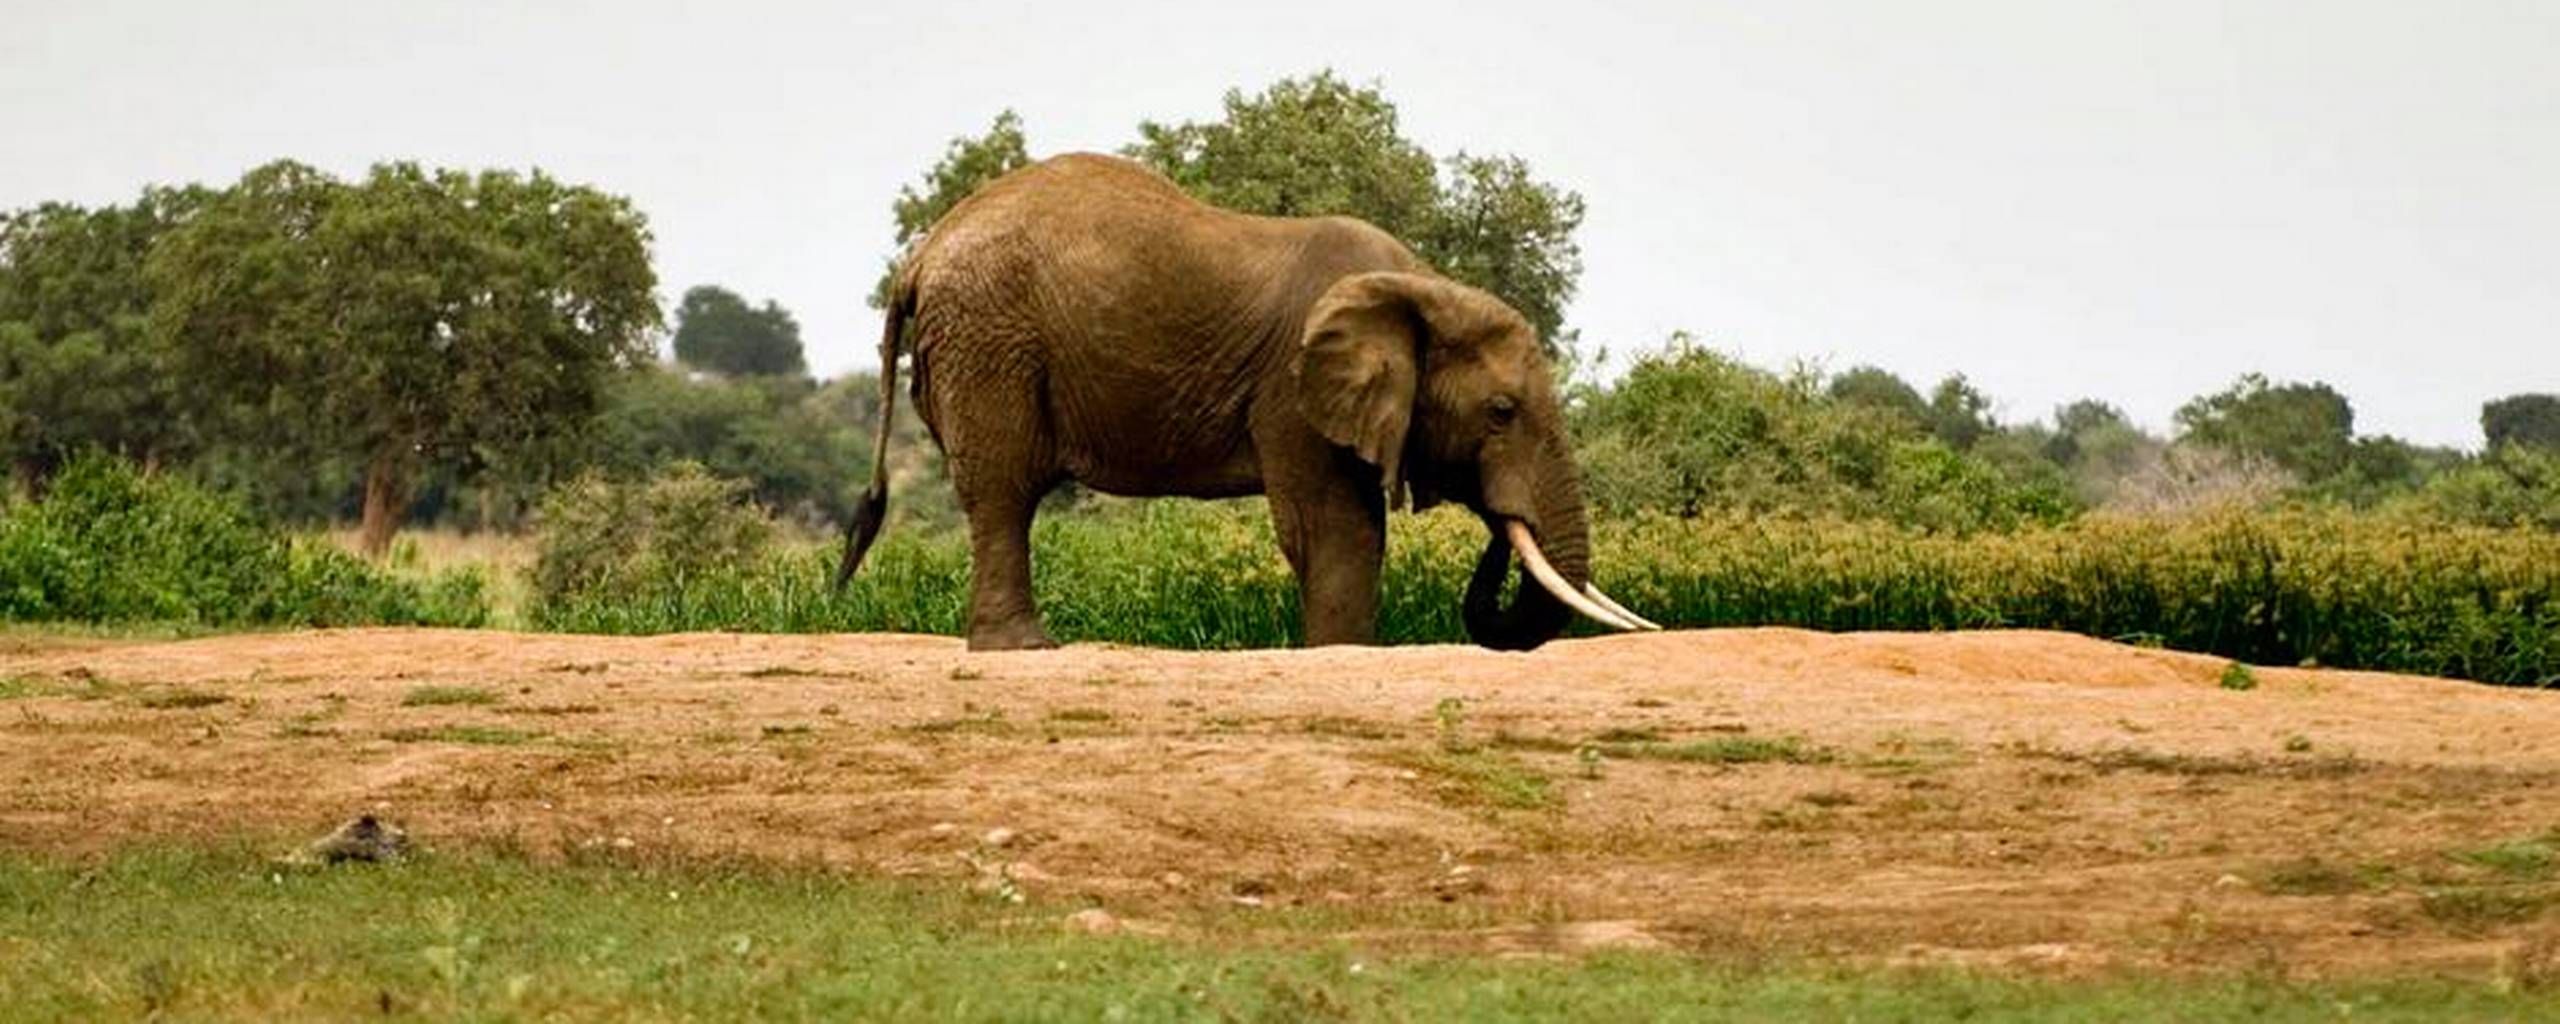 Monet Humanistisk biord Elefanten hersker på savannen